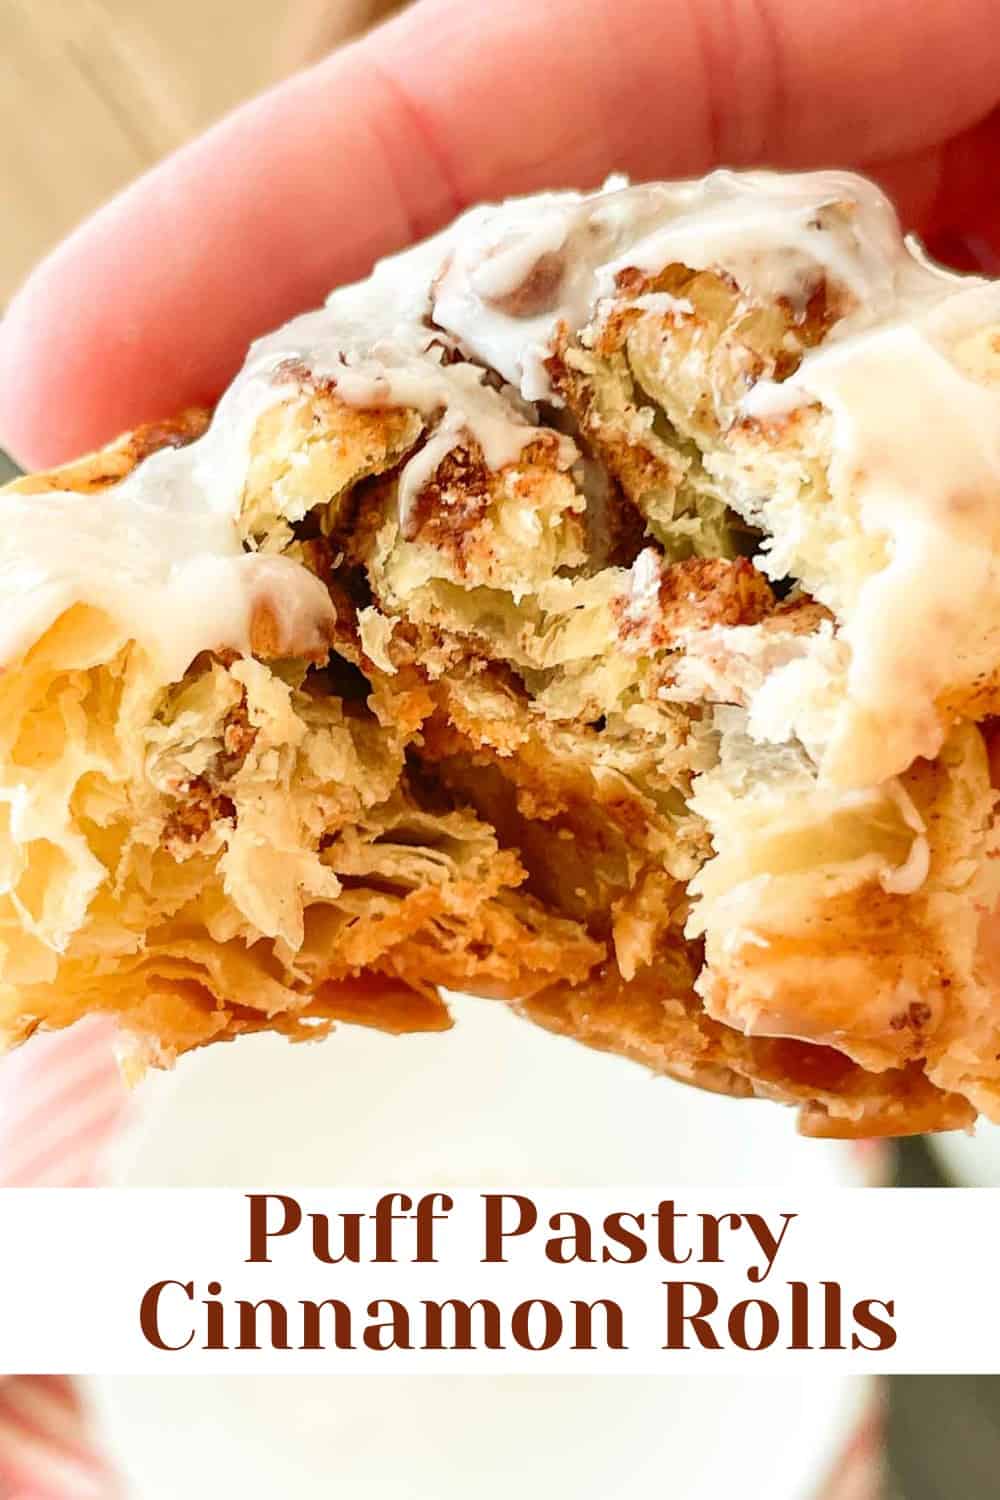 Puff pastry cinnamon rolls.